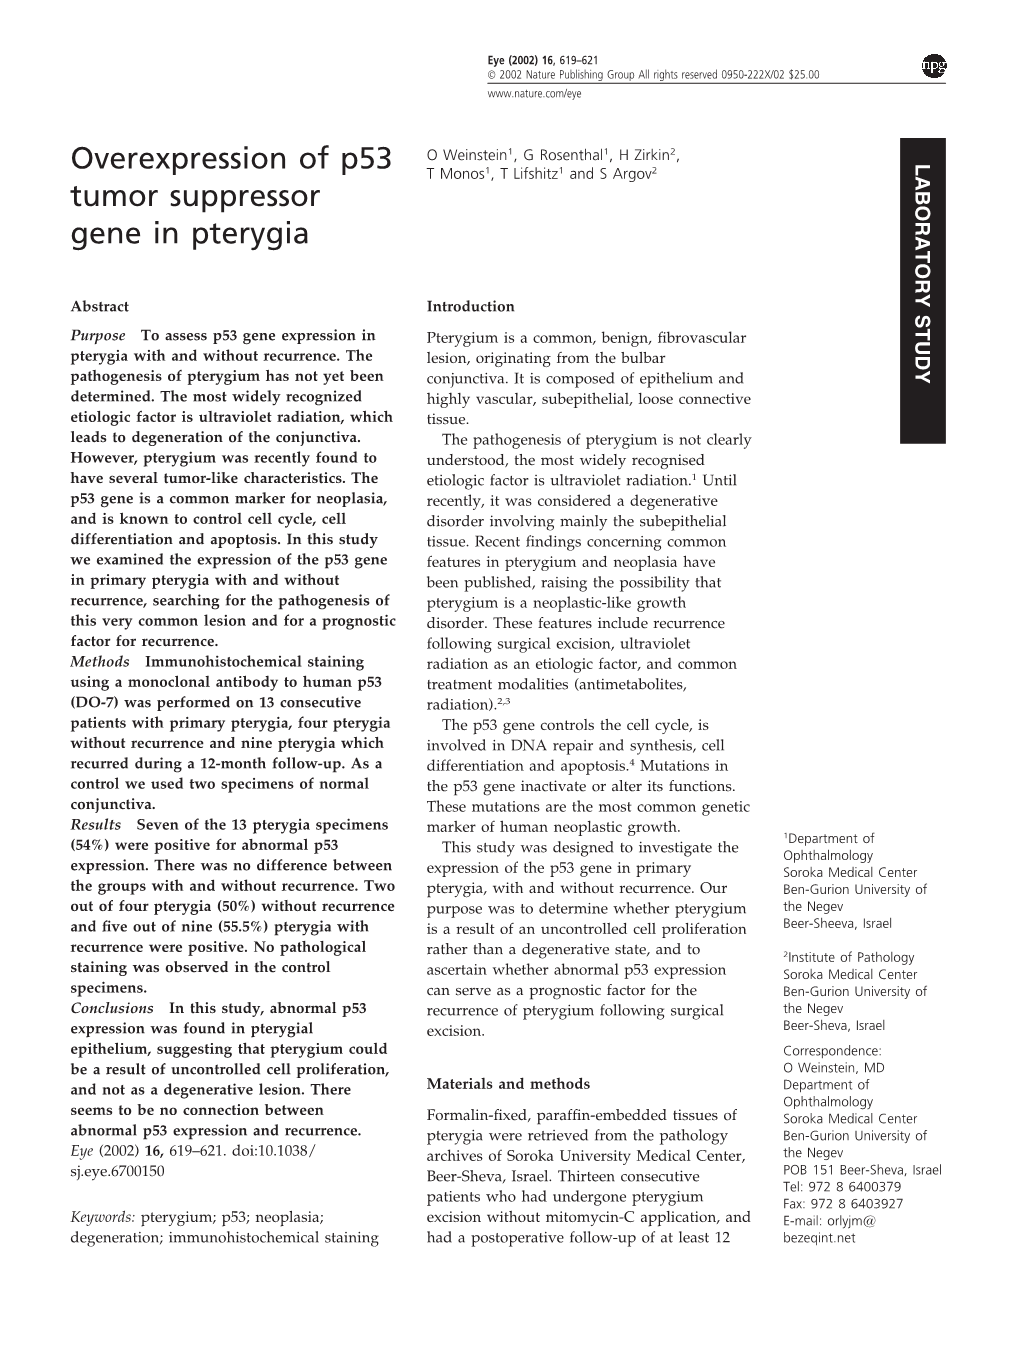 Overexpression of P53 Tumor Suppressor Gene in Pterygia